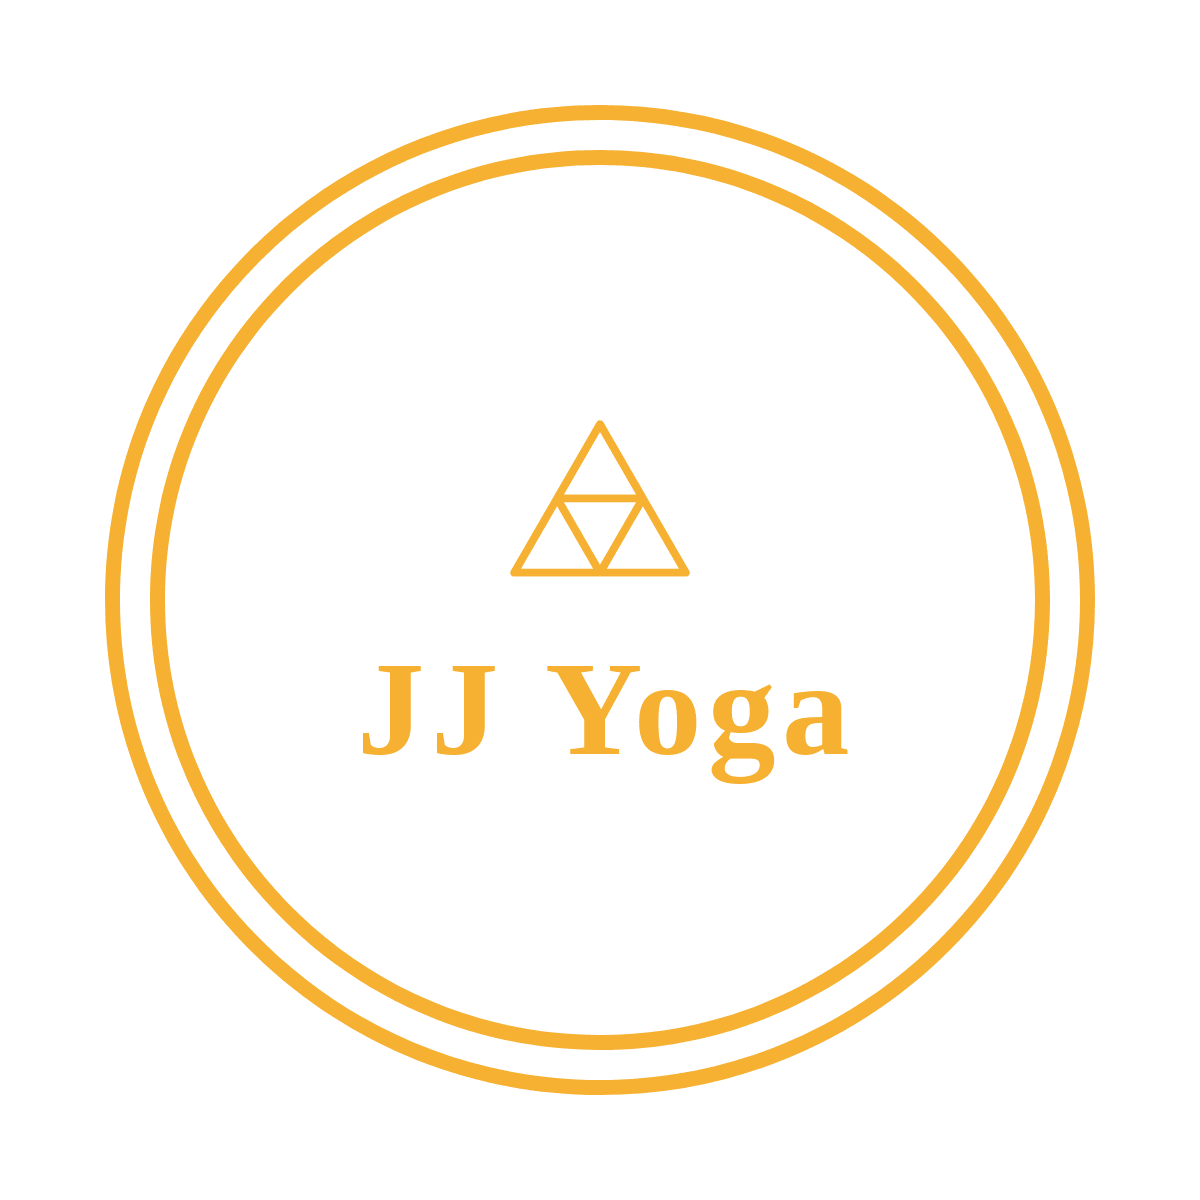 Jennifer Juenemann Yoga